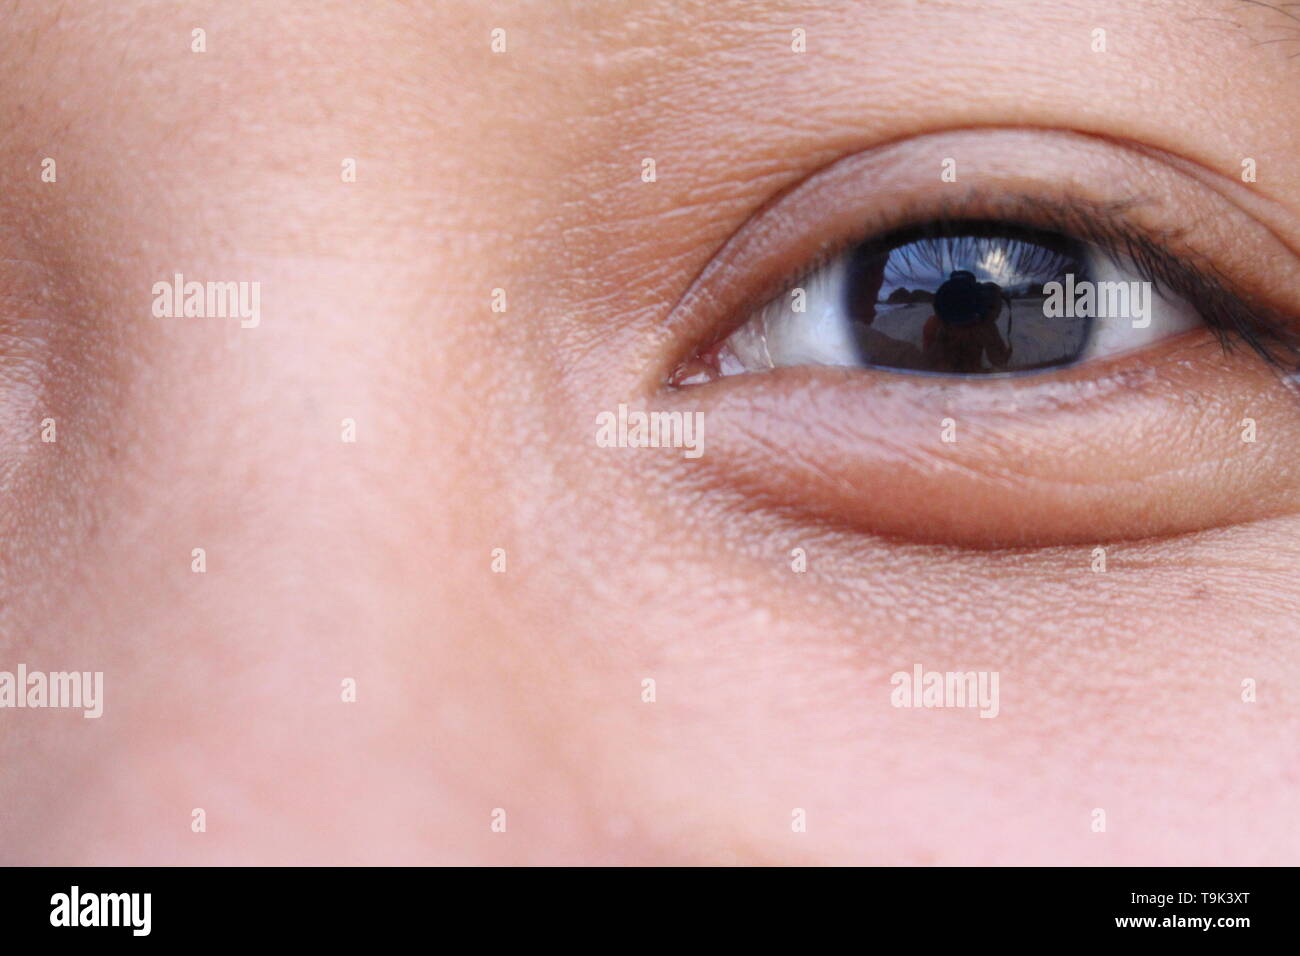 the eye of asian woman Stock Photo